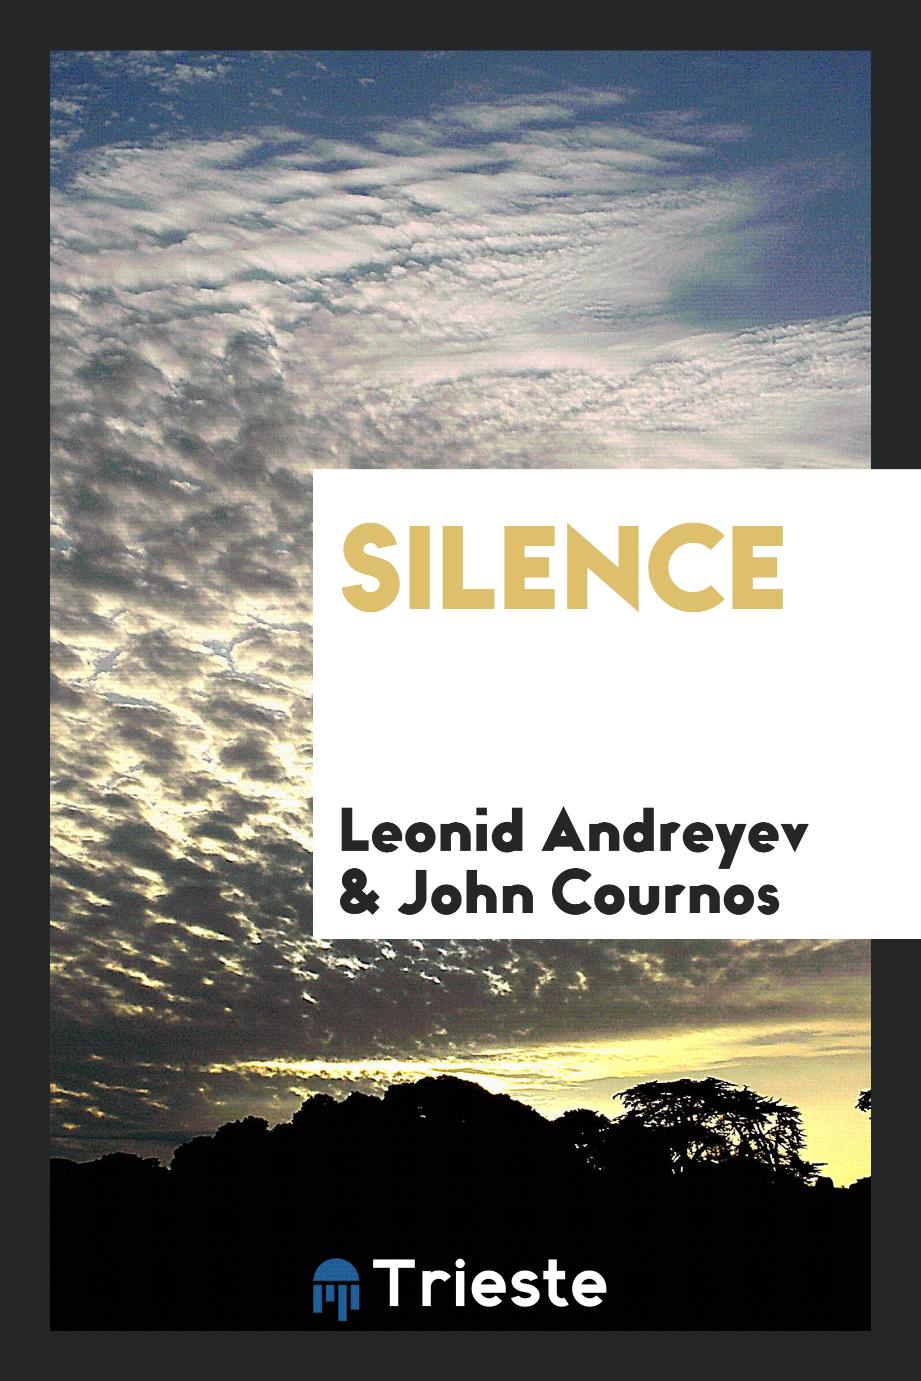 Leonid Andreyev, John Cournos - Silence